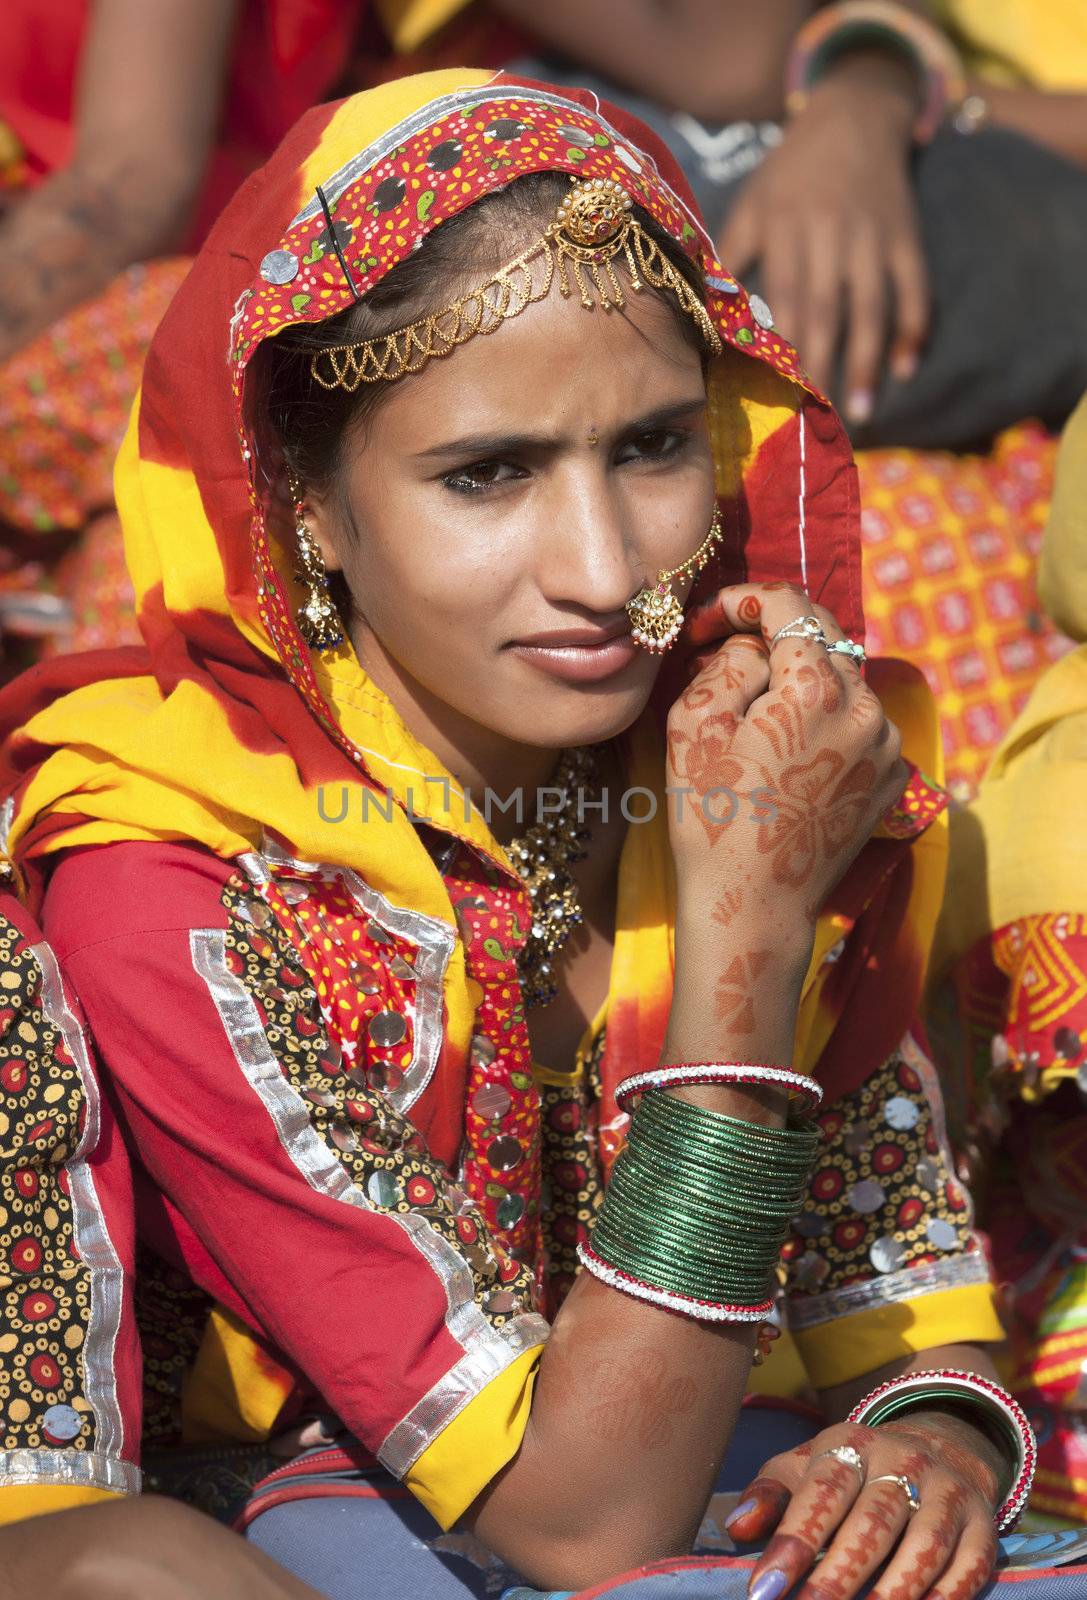 Indian girl in colorful ethnic attire by vladimir_sklyarov